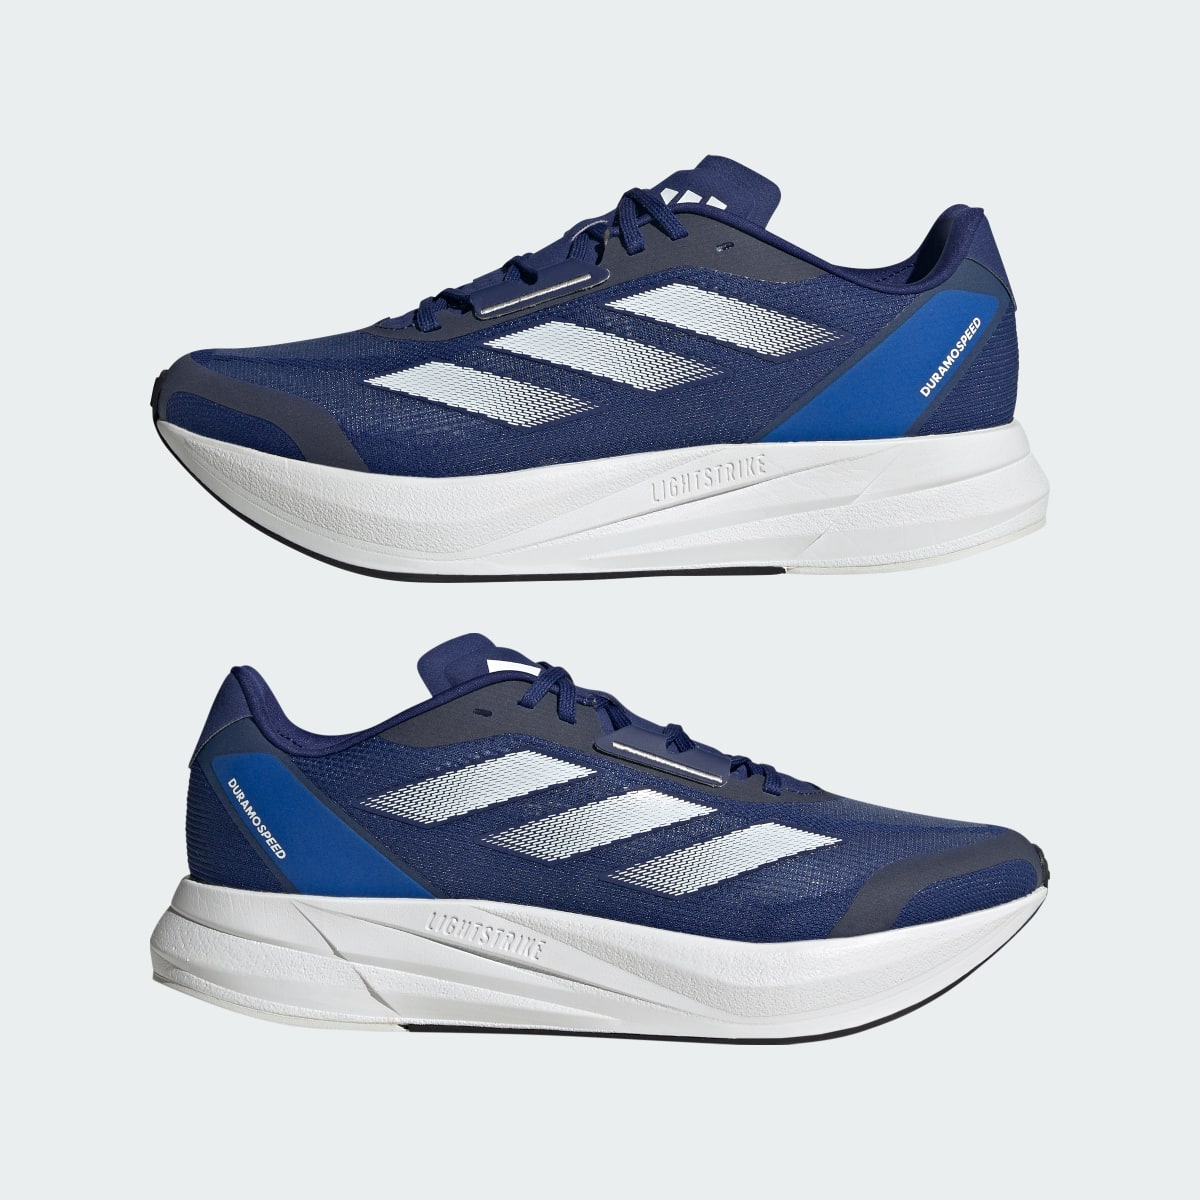 Adidas Duramo Speed Shoes. 8